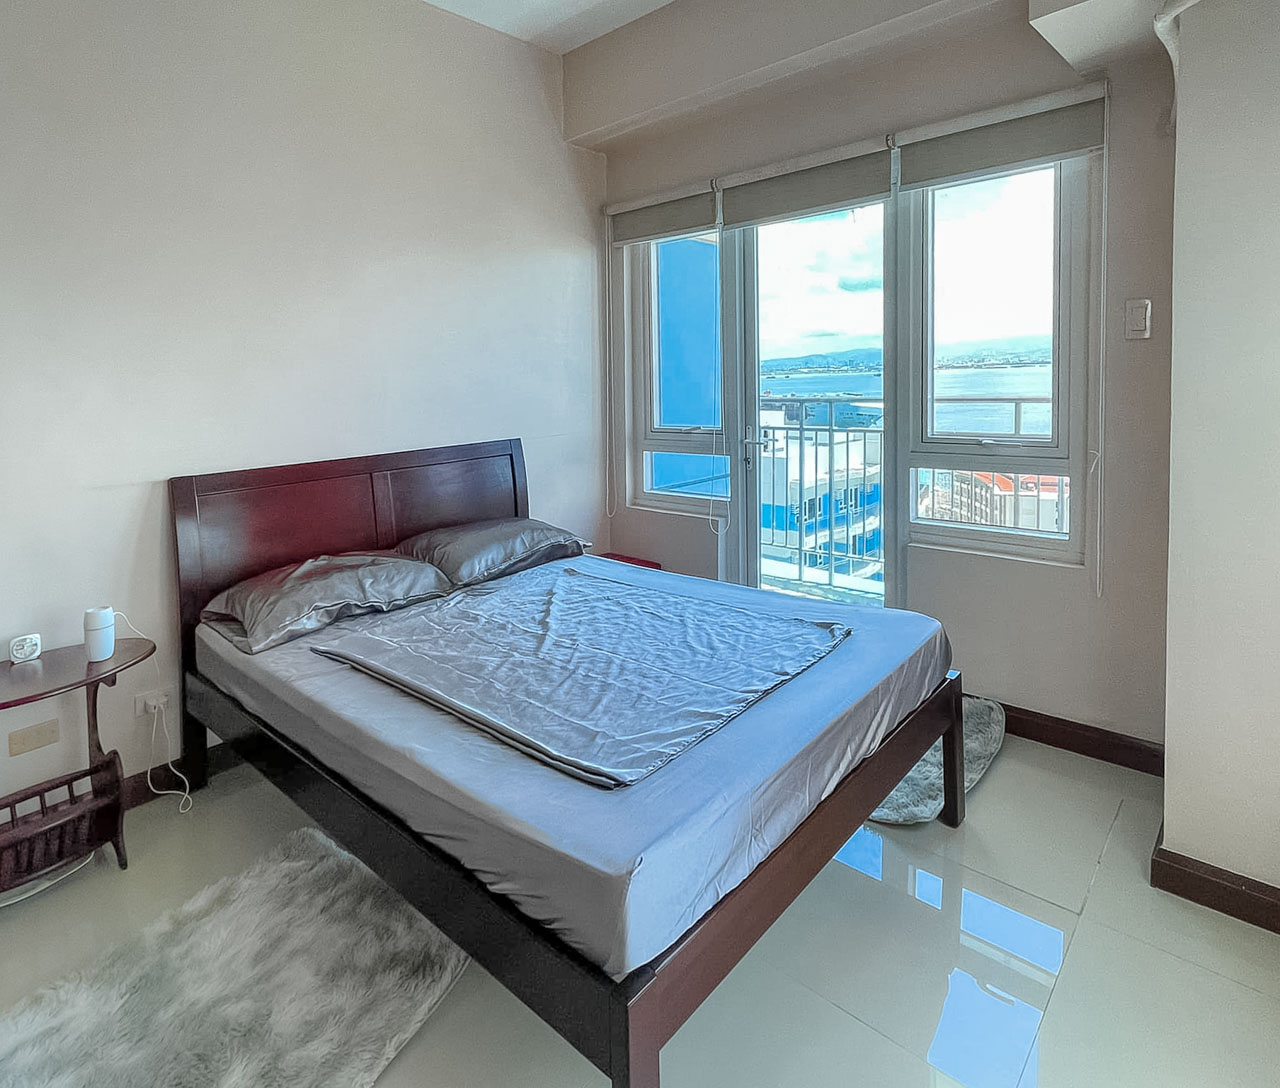 RCARM1 Furnished 2 Bedroom Condo for Rent in Mactan Lapu-Lapu - 8